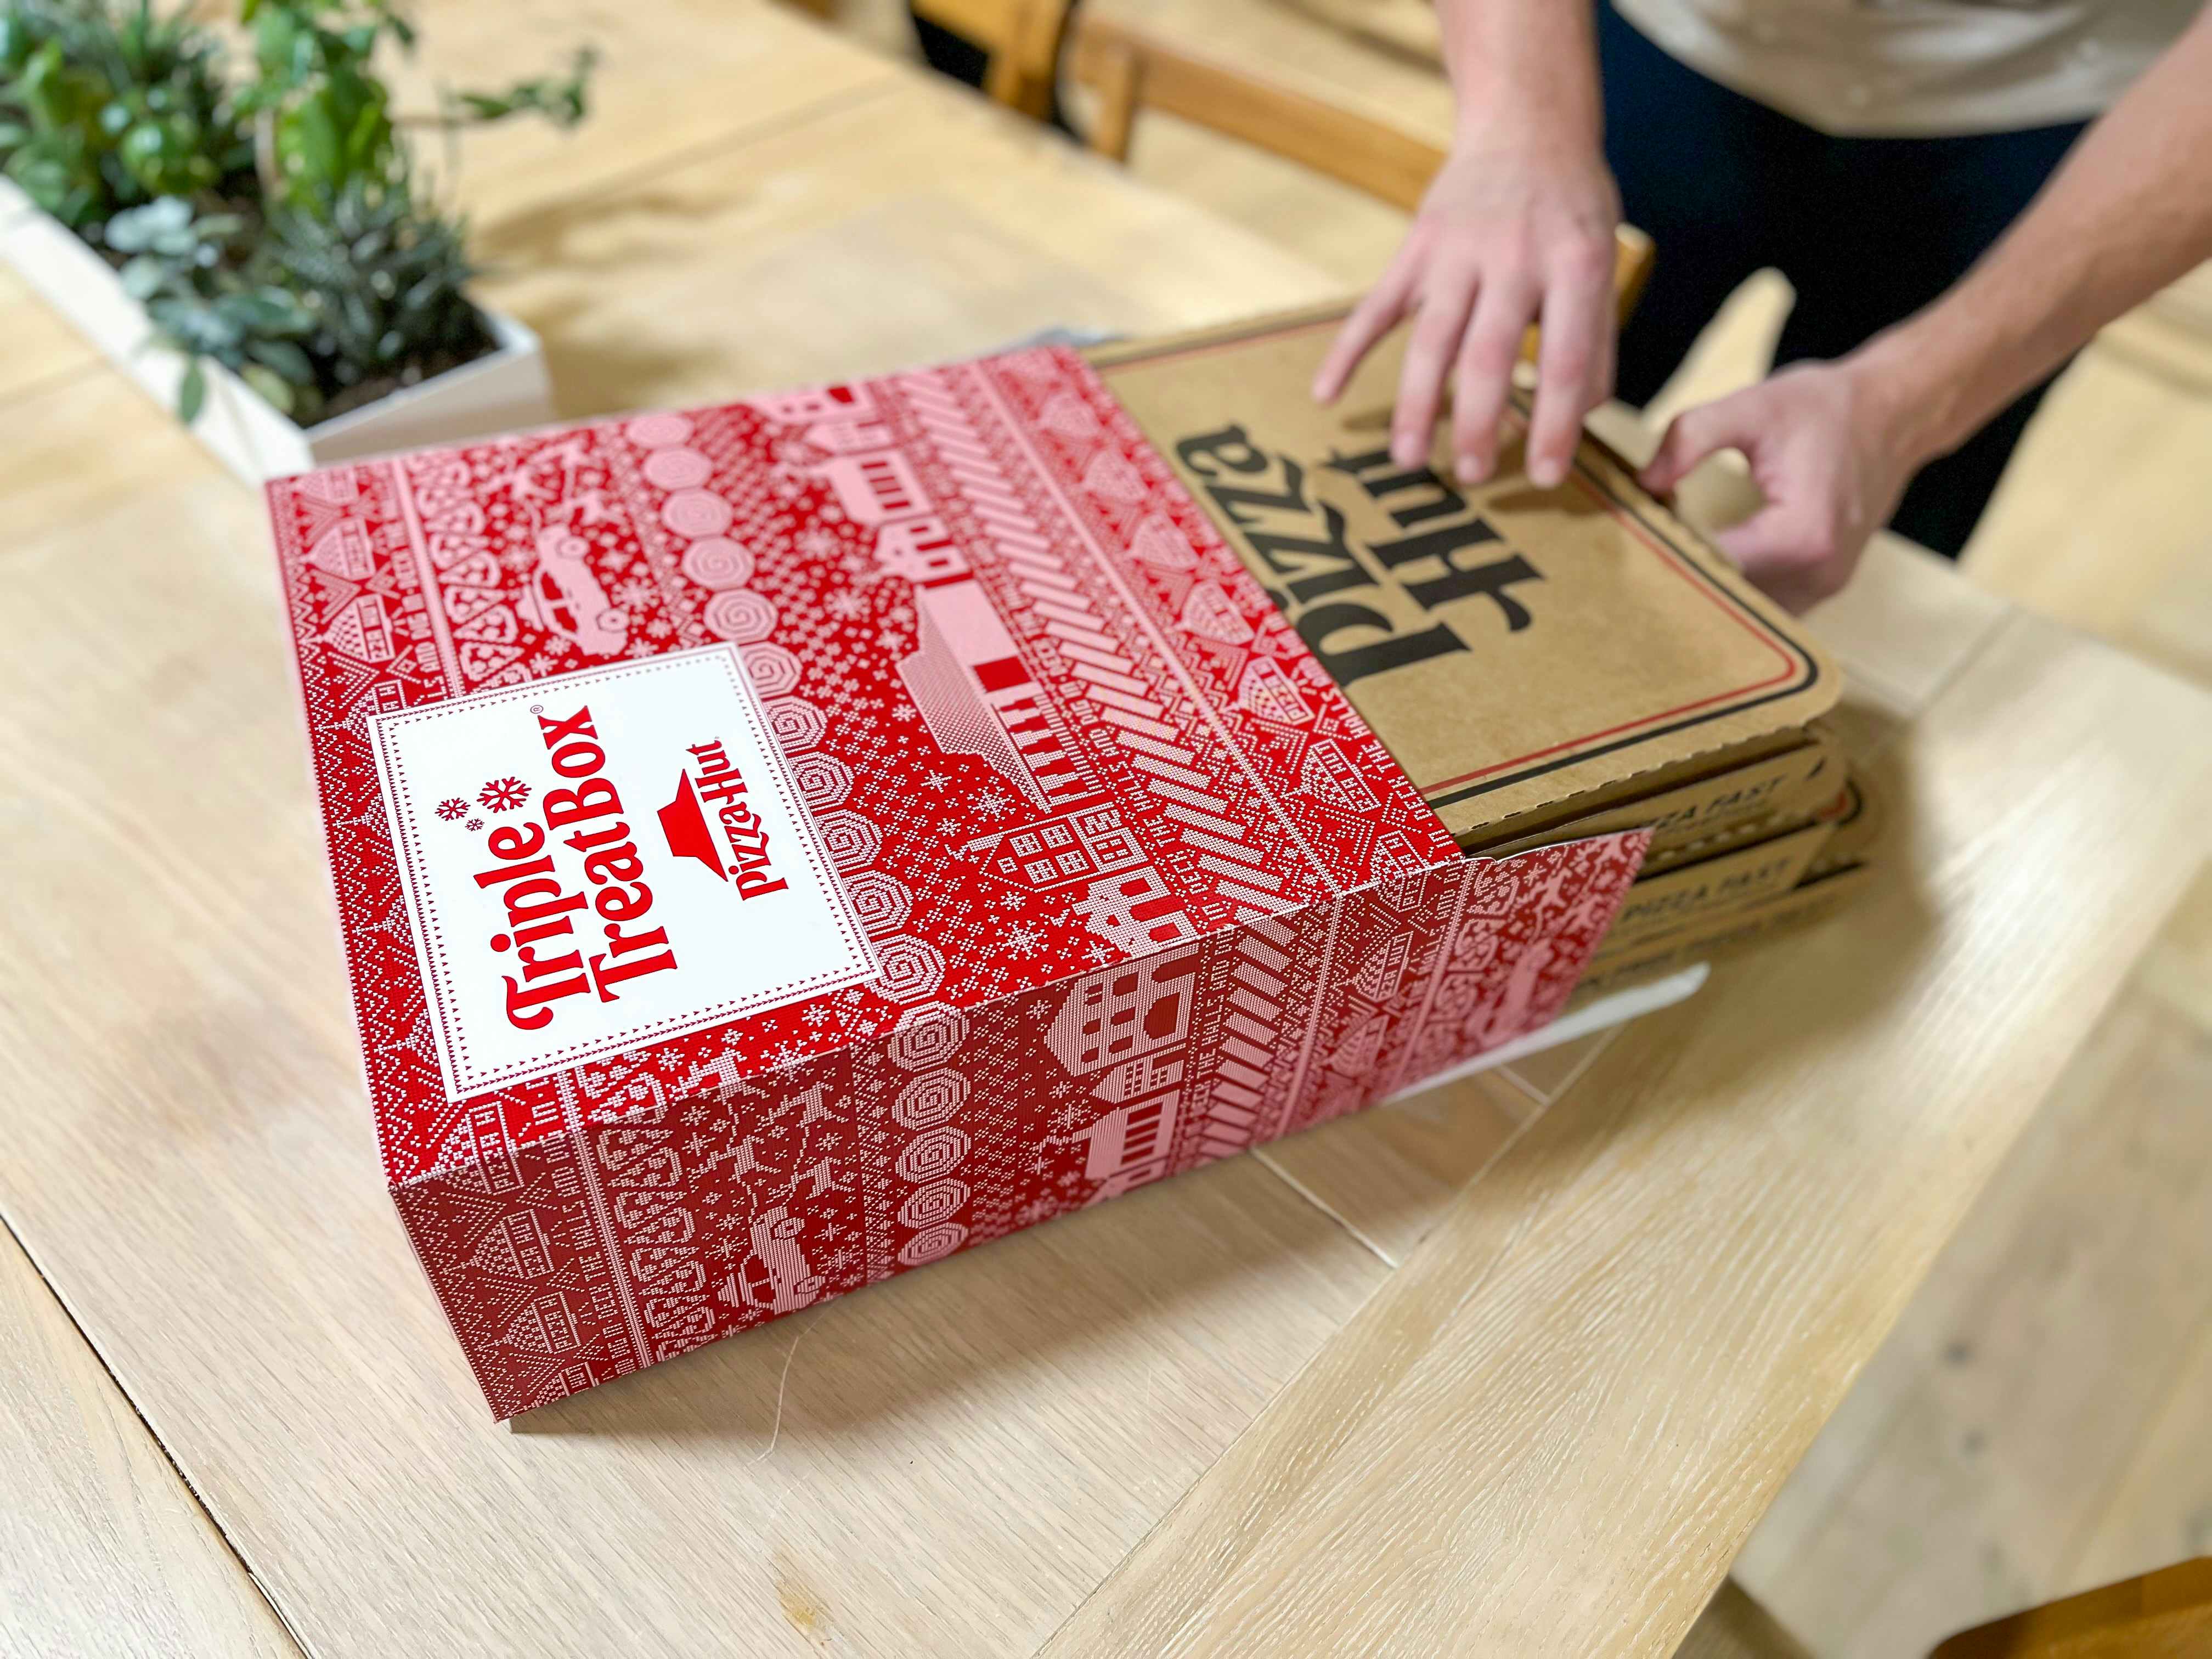 Pizza Hut on X: Get the Big Dinner Box. Check that box. Then grab